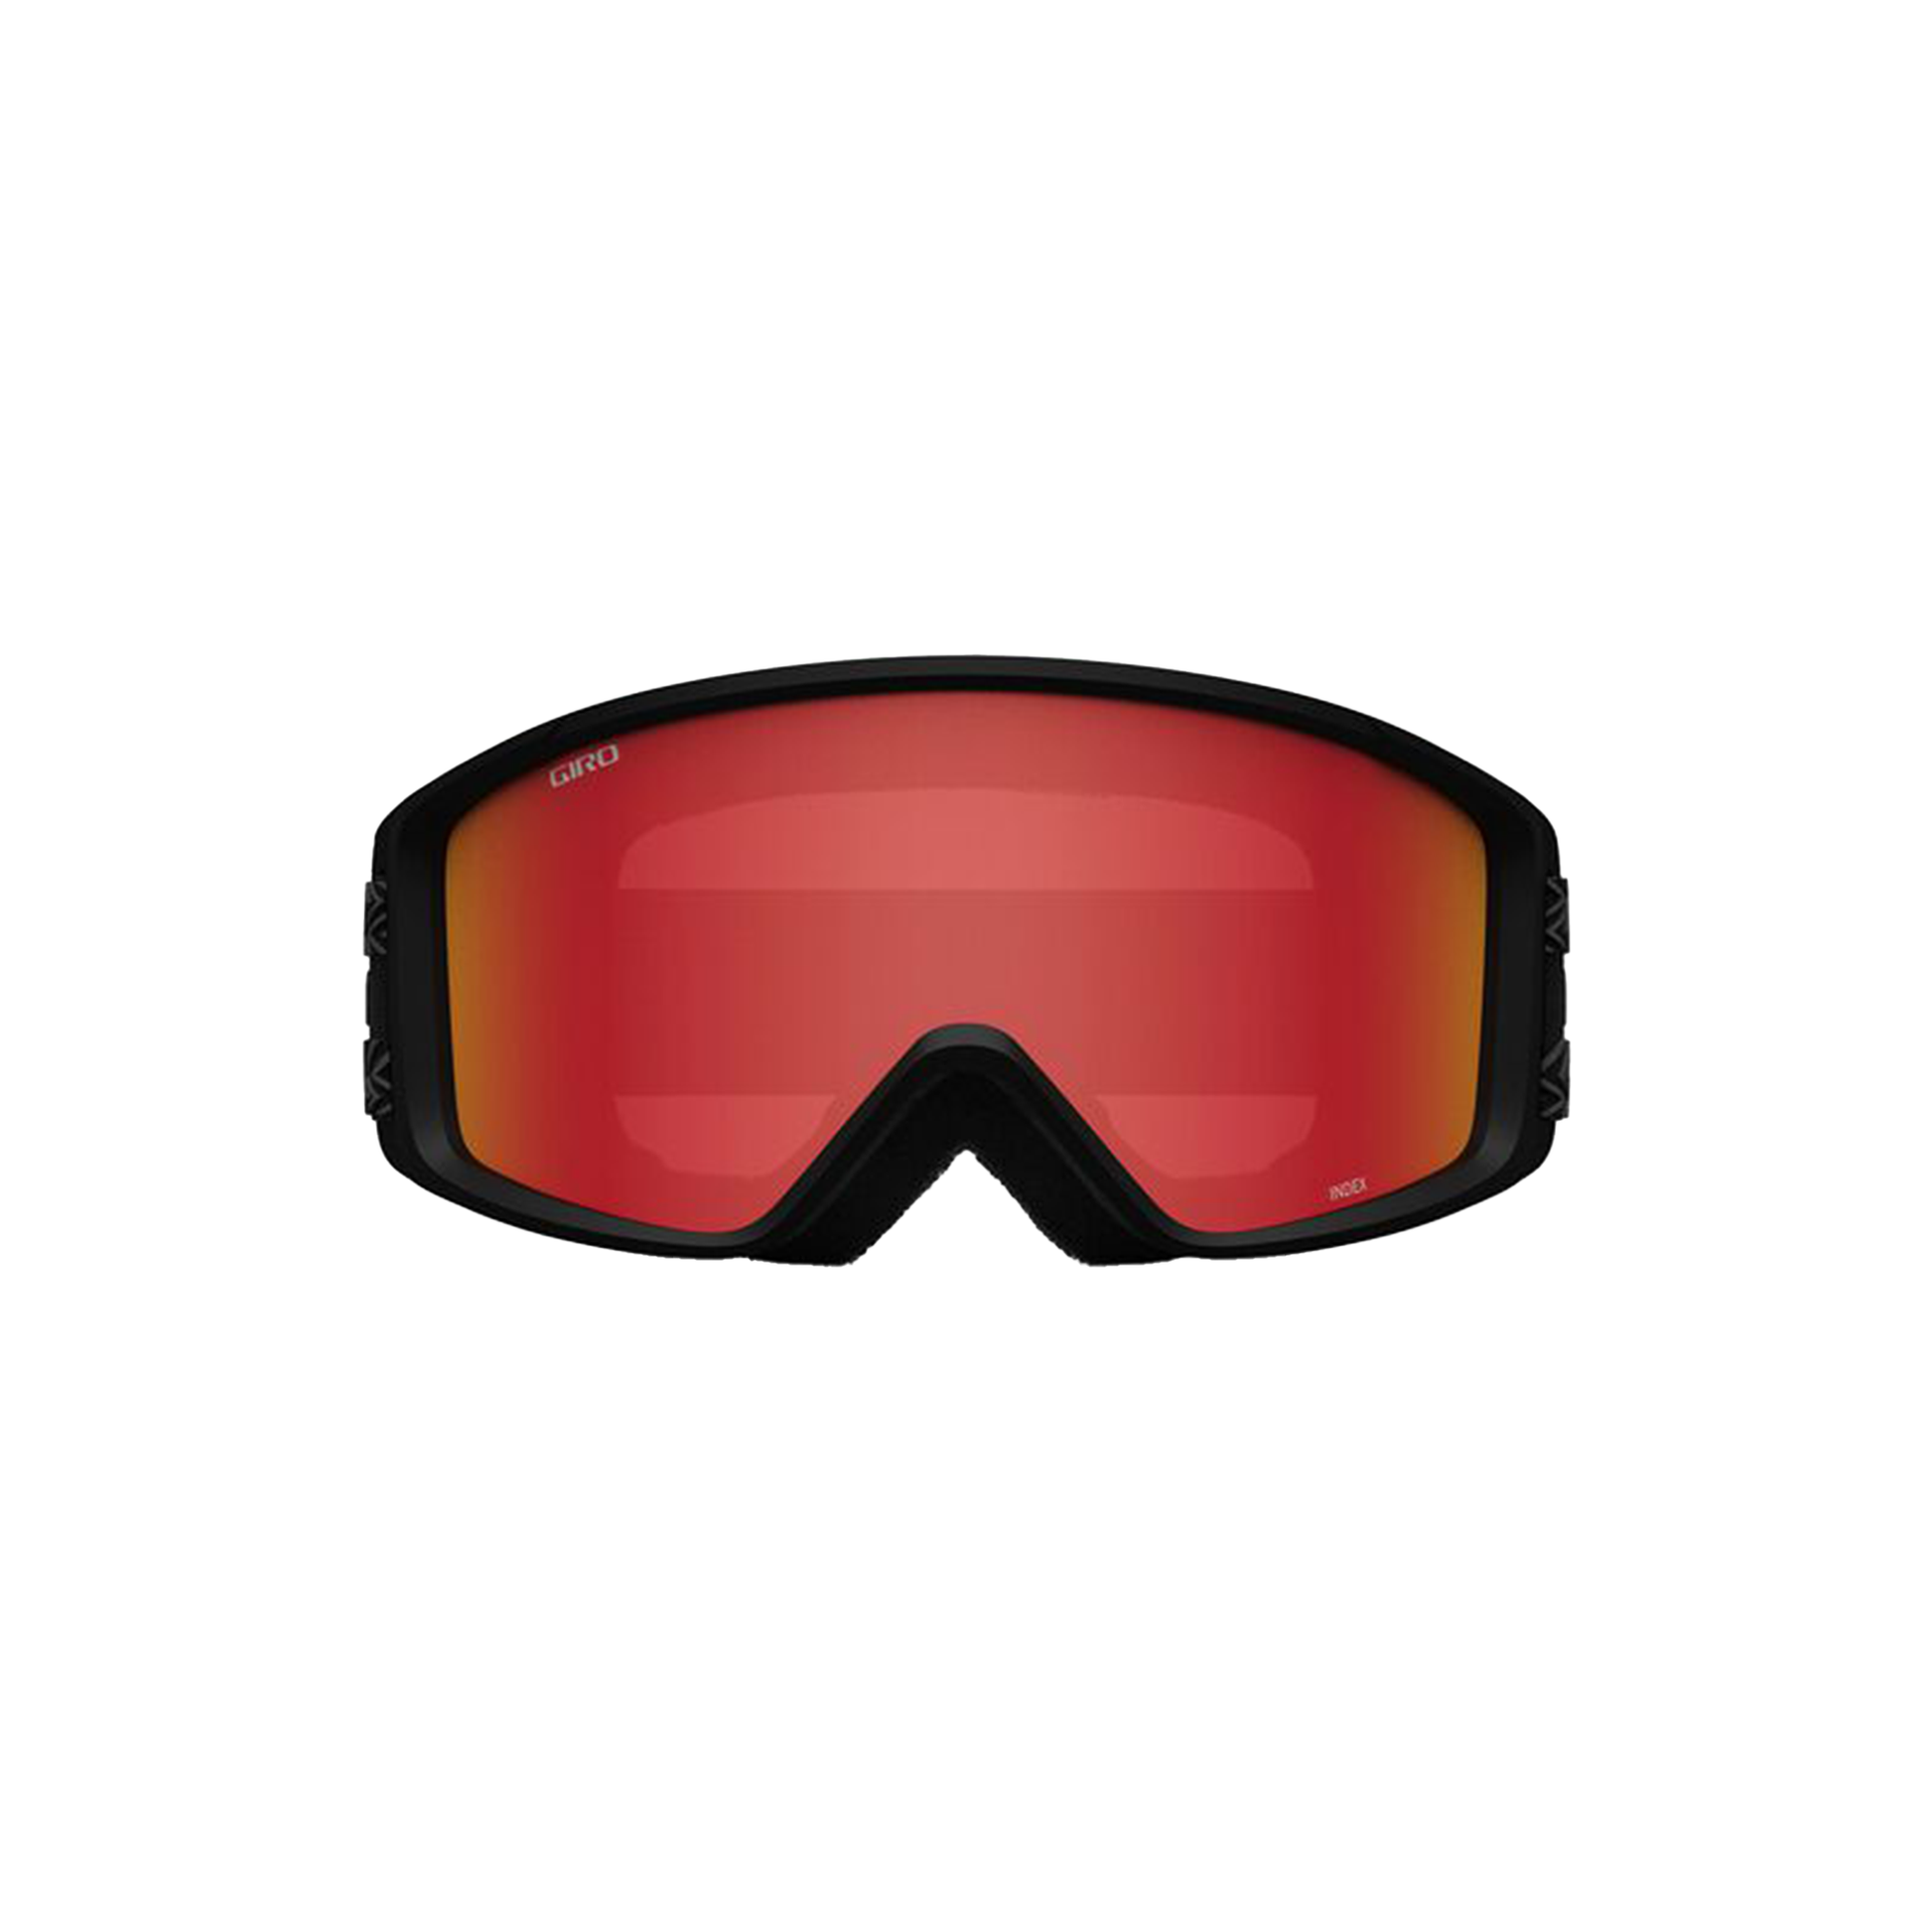 Giro Index 2.0 Snow Goggle Black Techline Amber Scarlet Snow Goggles